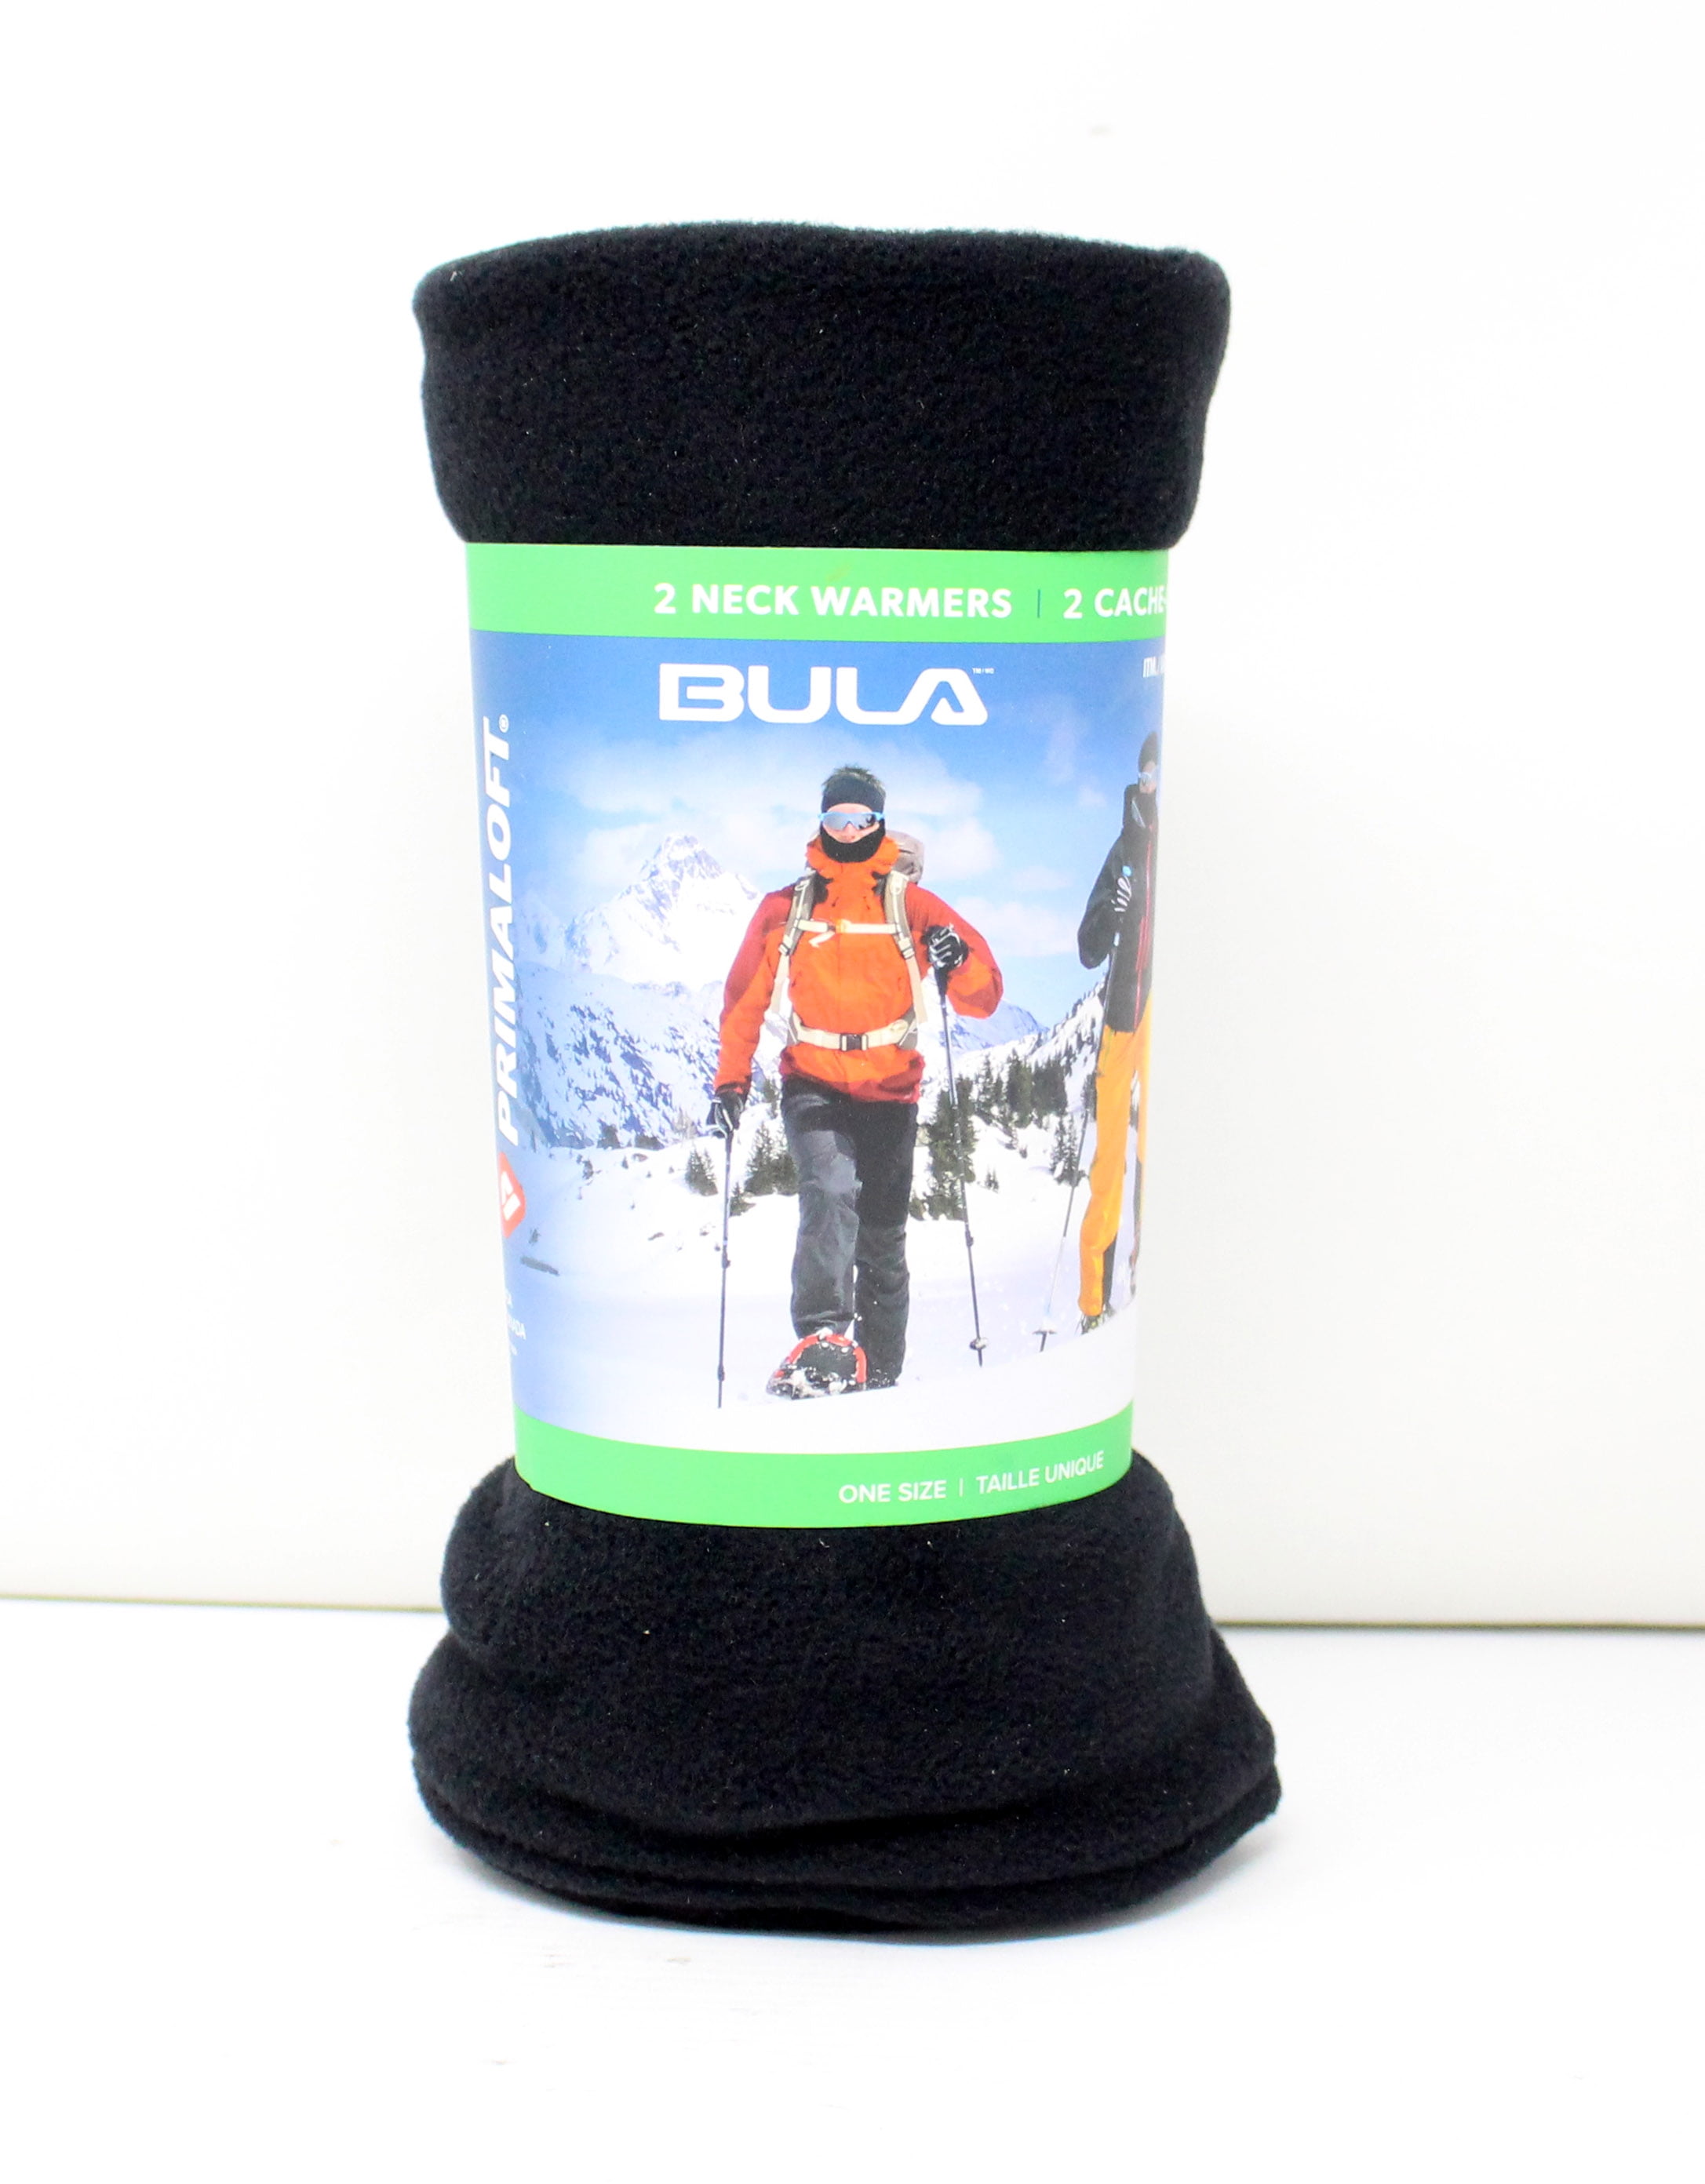 Bula Polartec Fleece Neck Warmers 2 Pack Brand New 